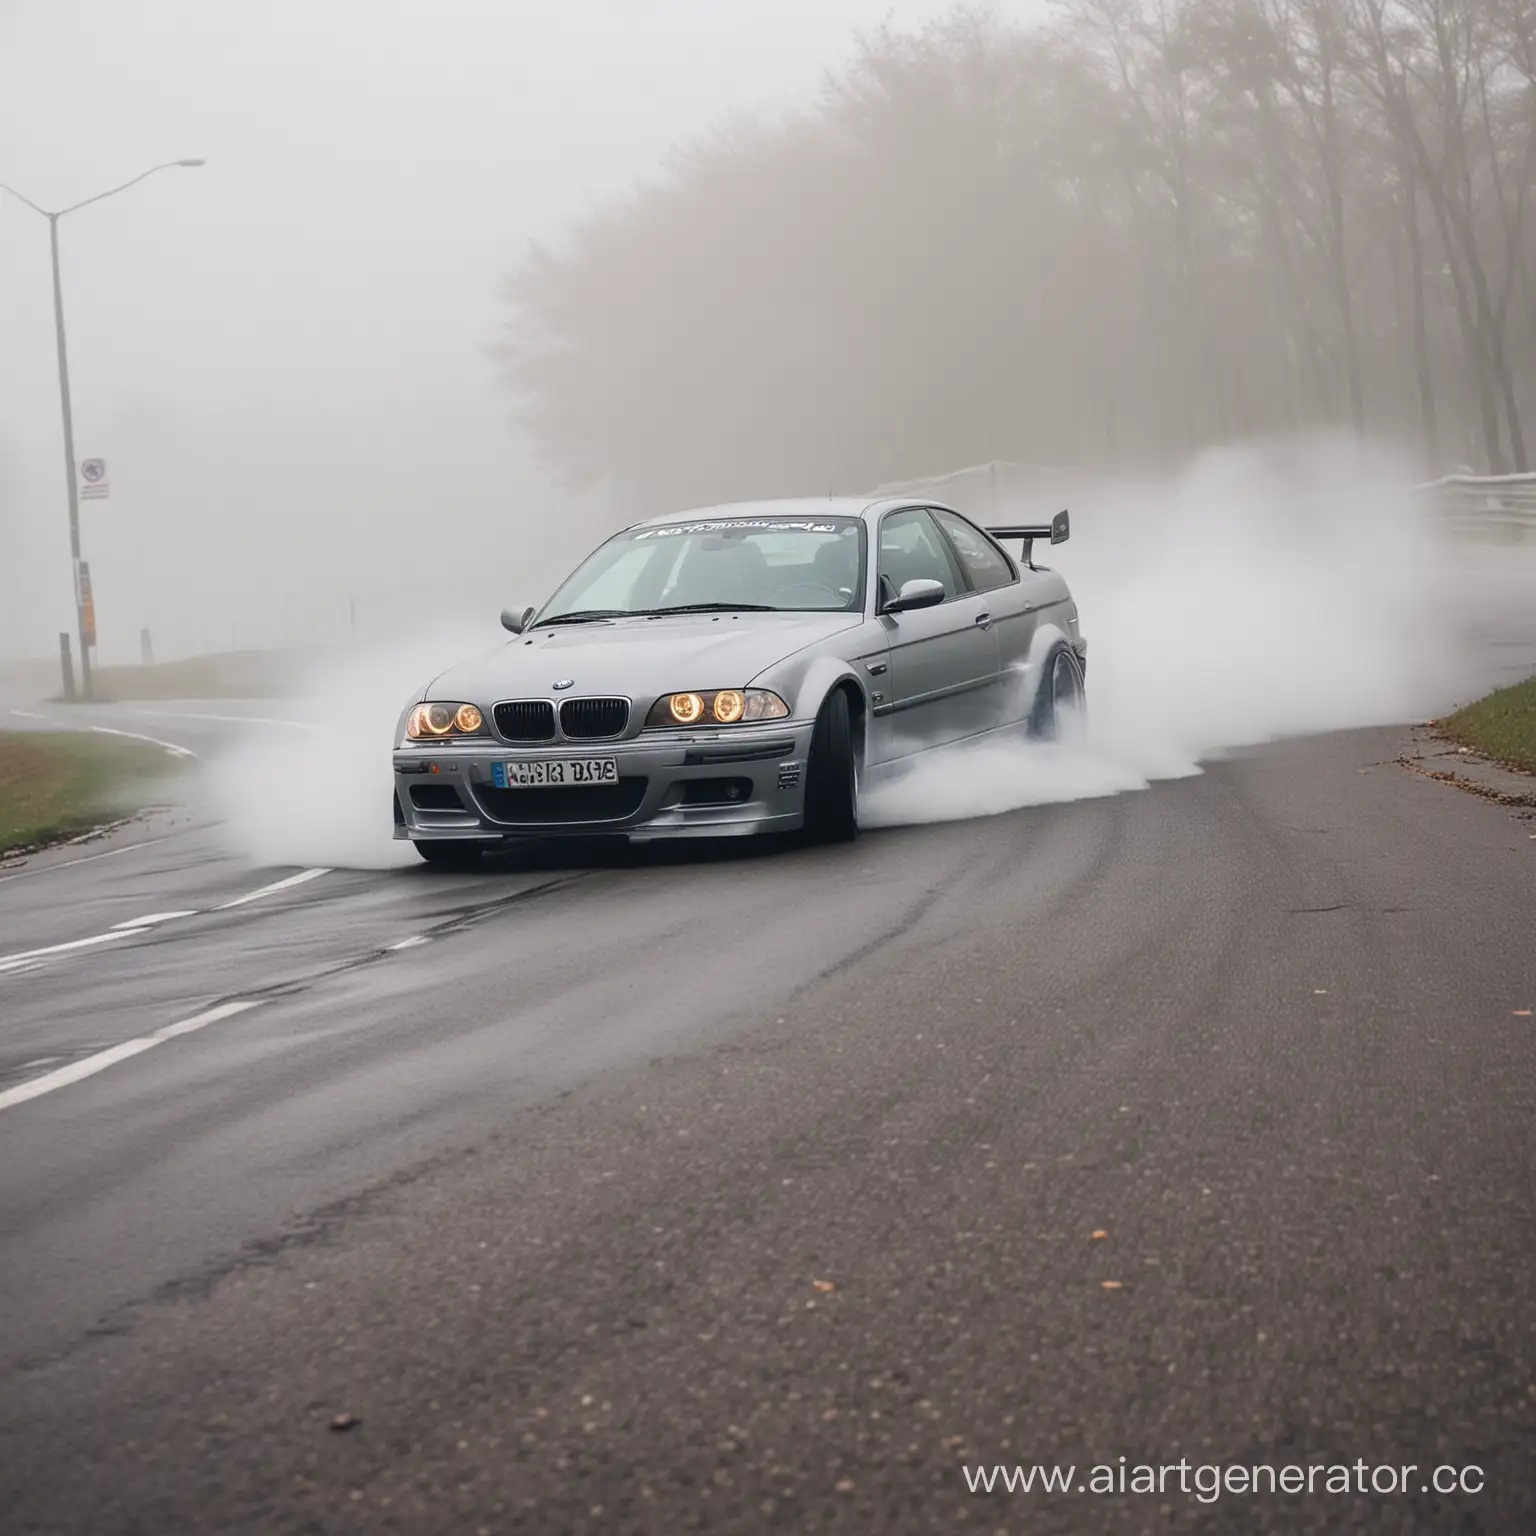 Dynamic-BMW-E46-Drifting-in-Foggy-Environment